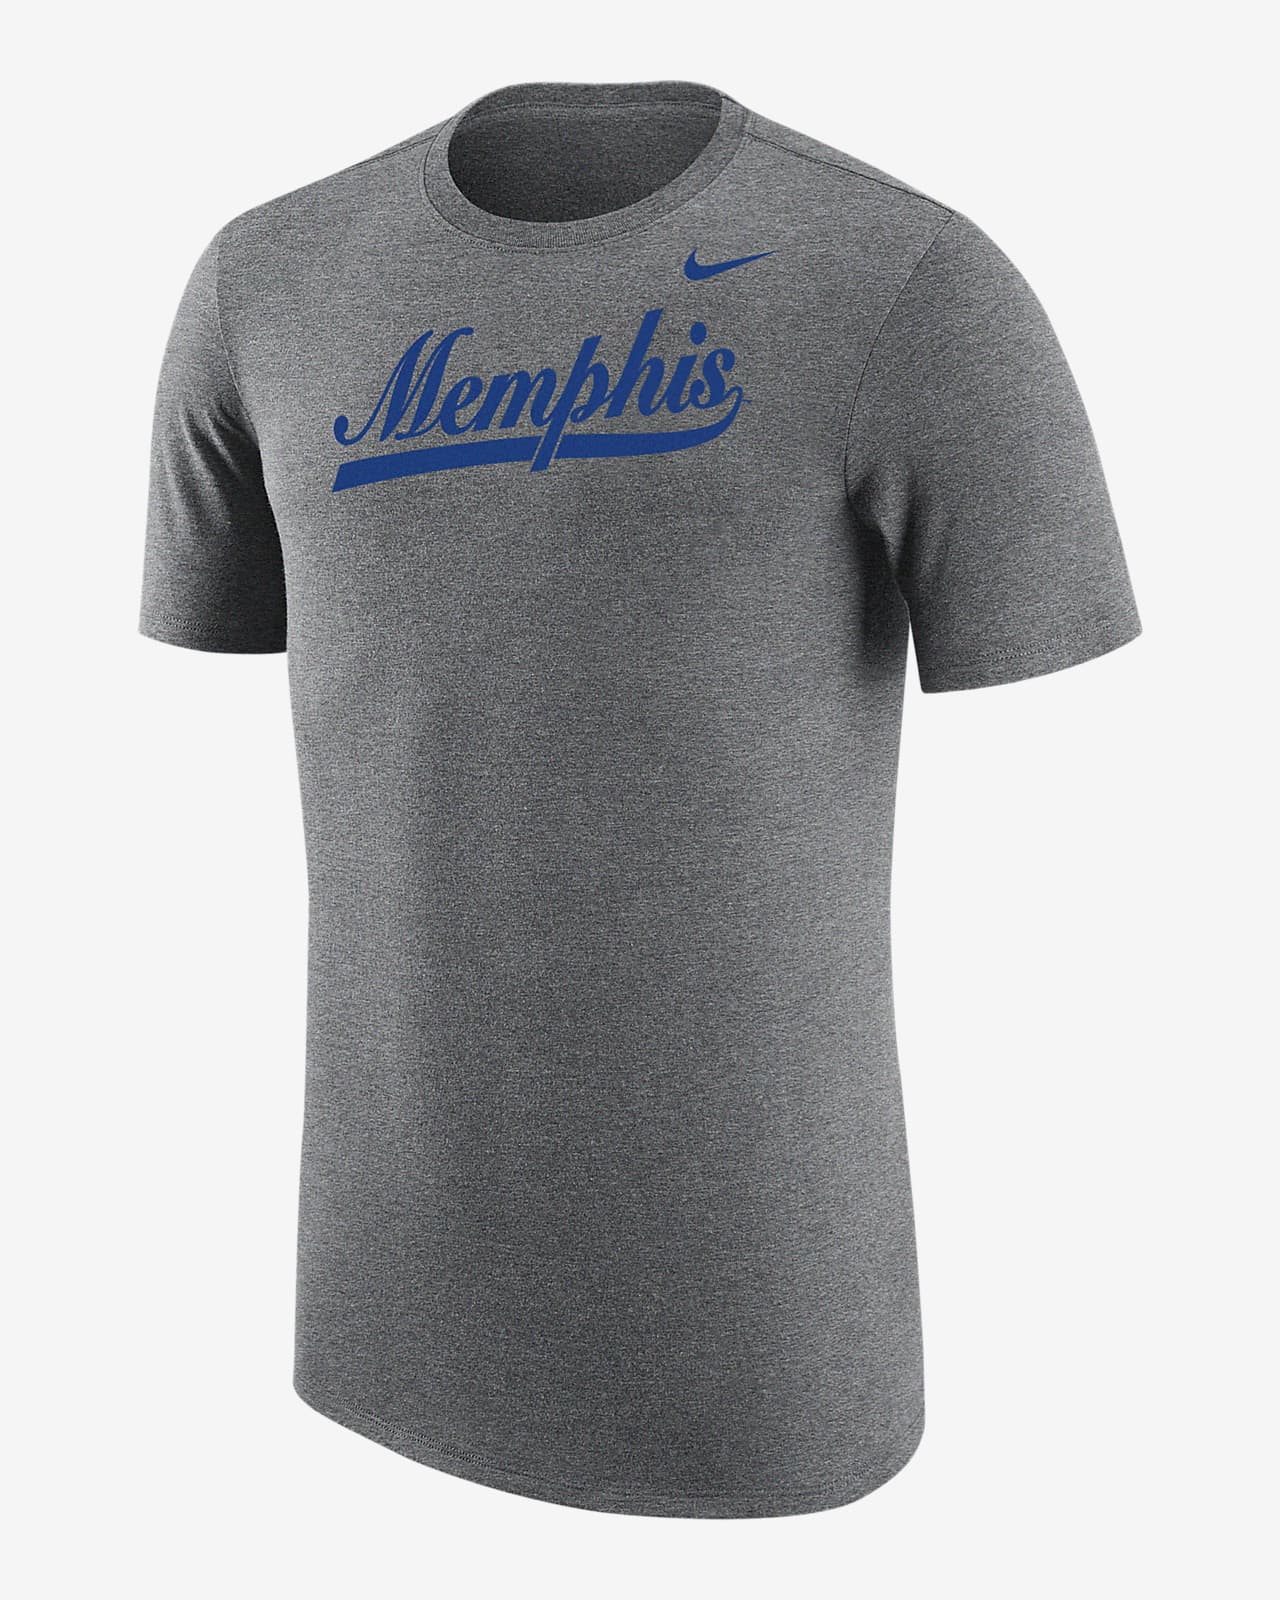 Playera Nike College para hombre Memphis